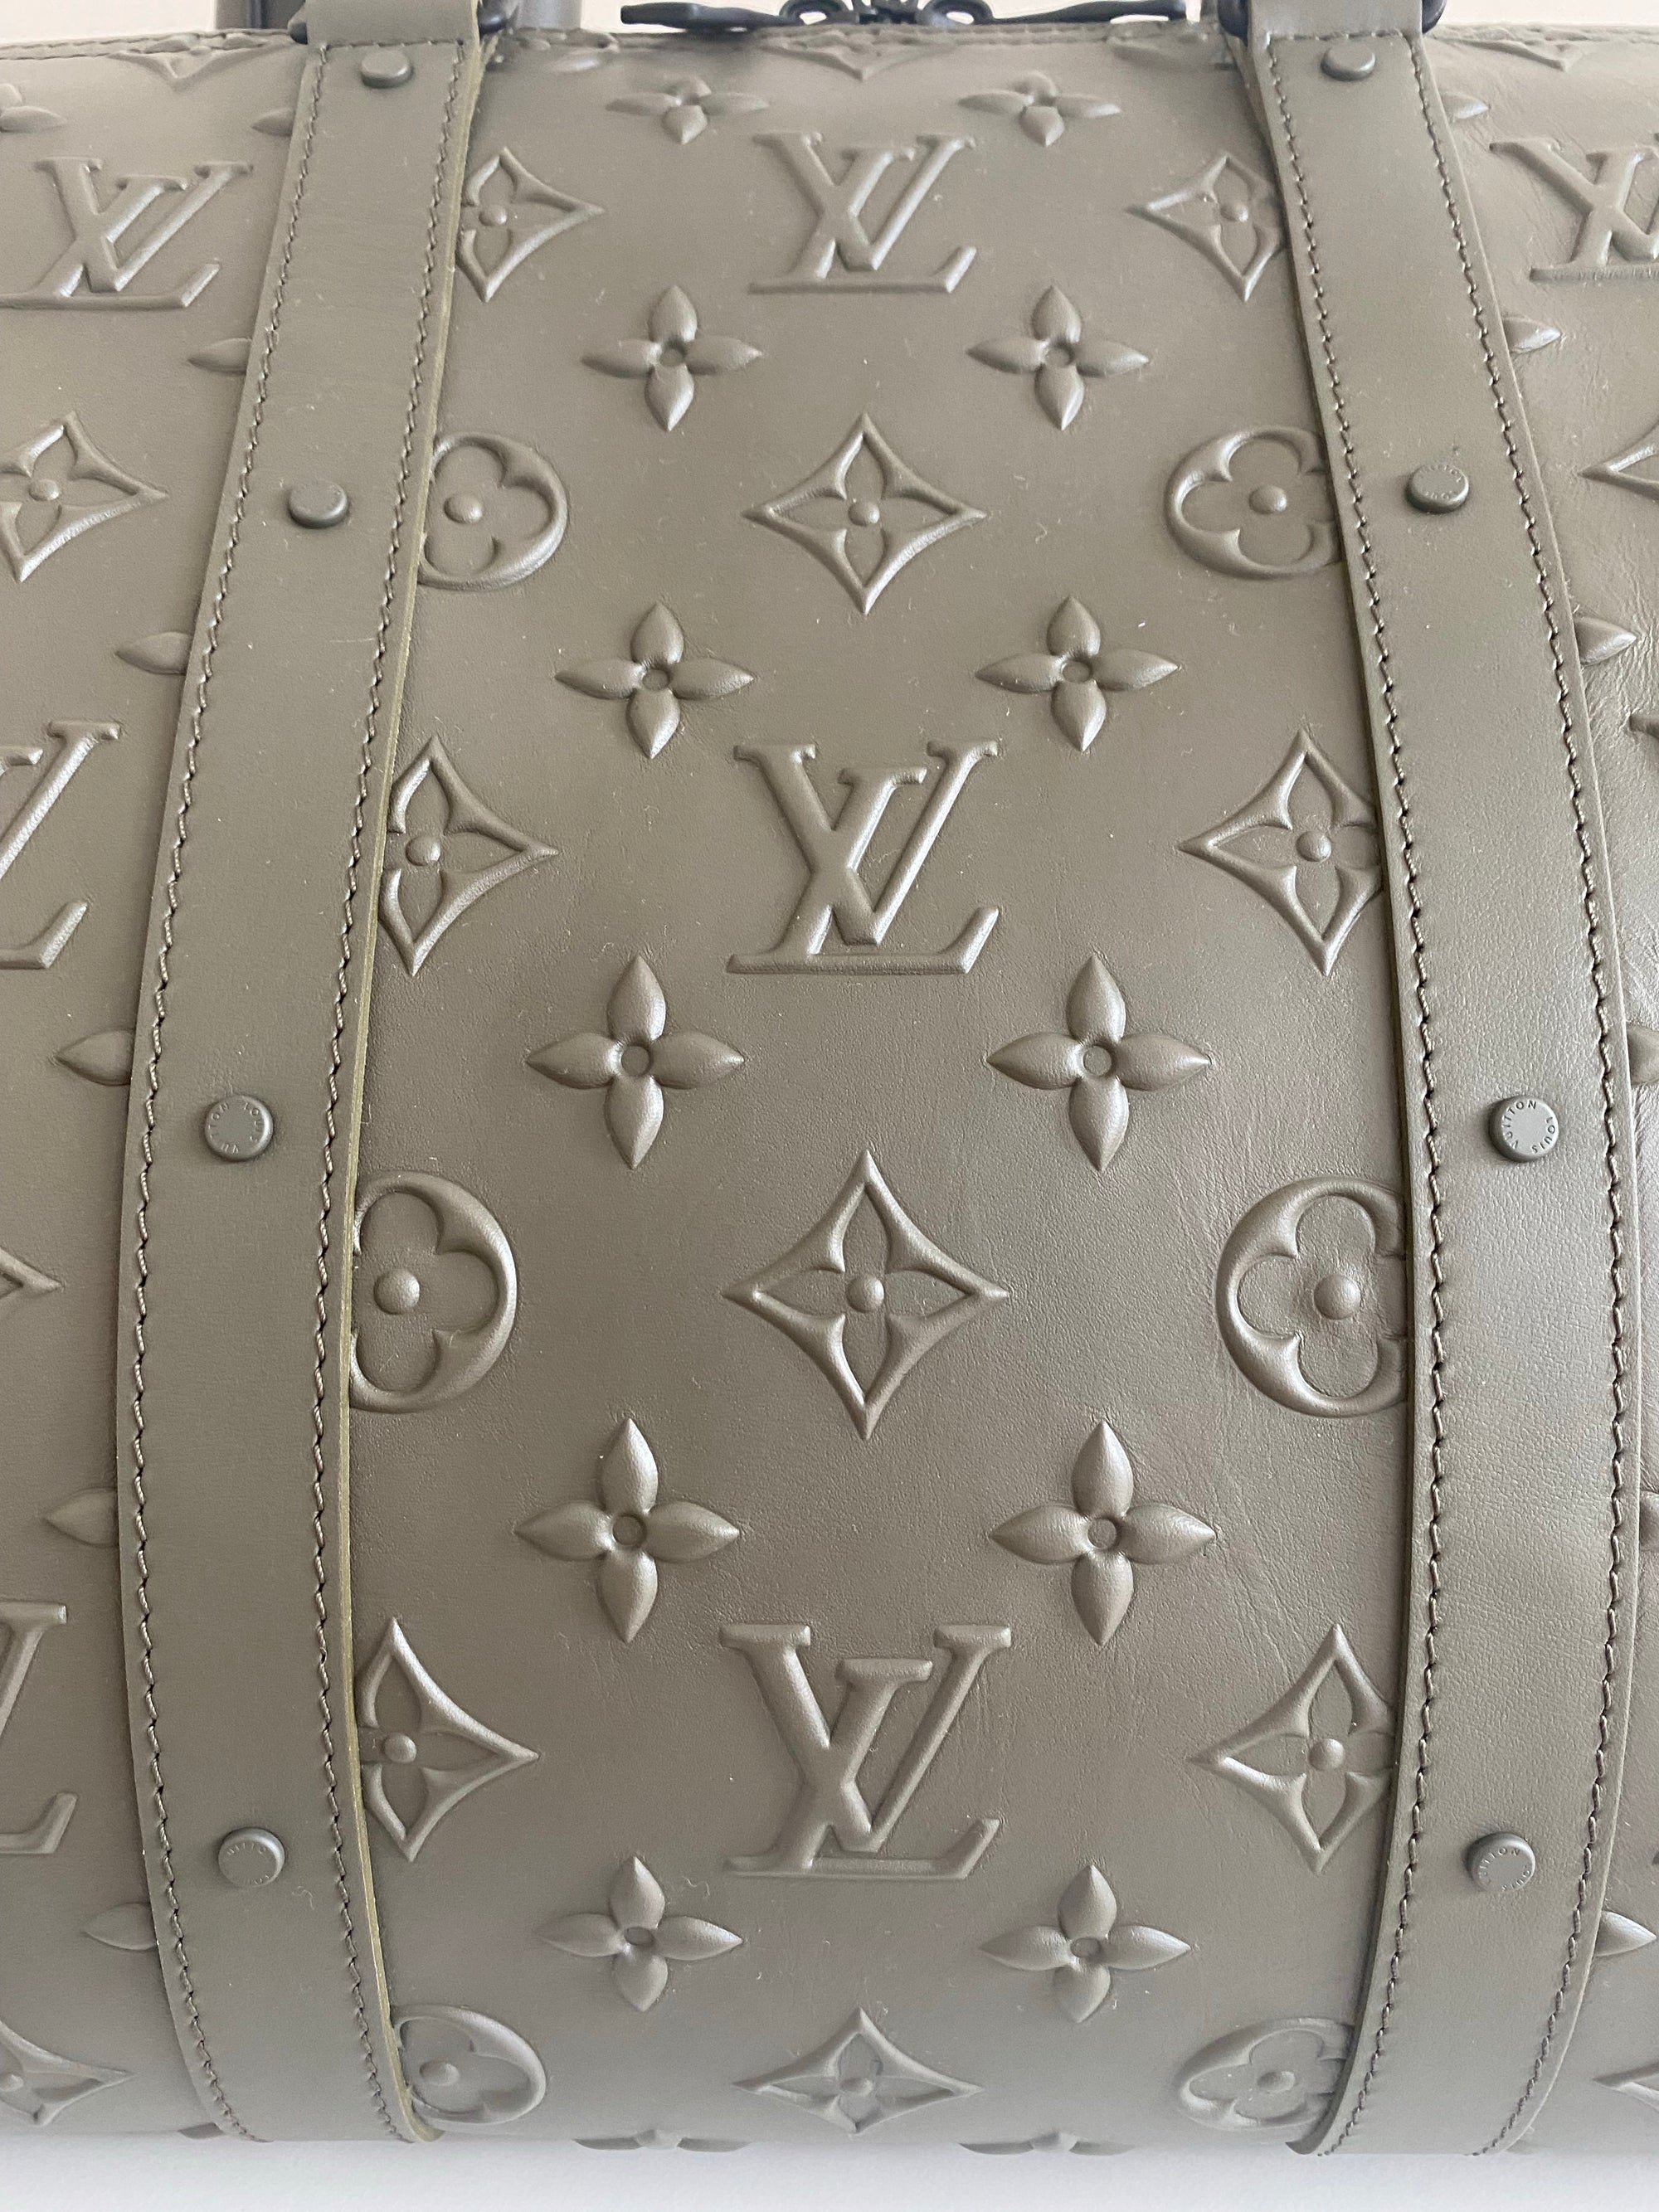 Louis Vuitton Keepall Bandouliere 50 Titanium Grey Duffle, Women's